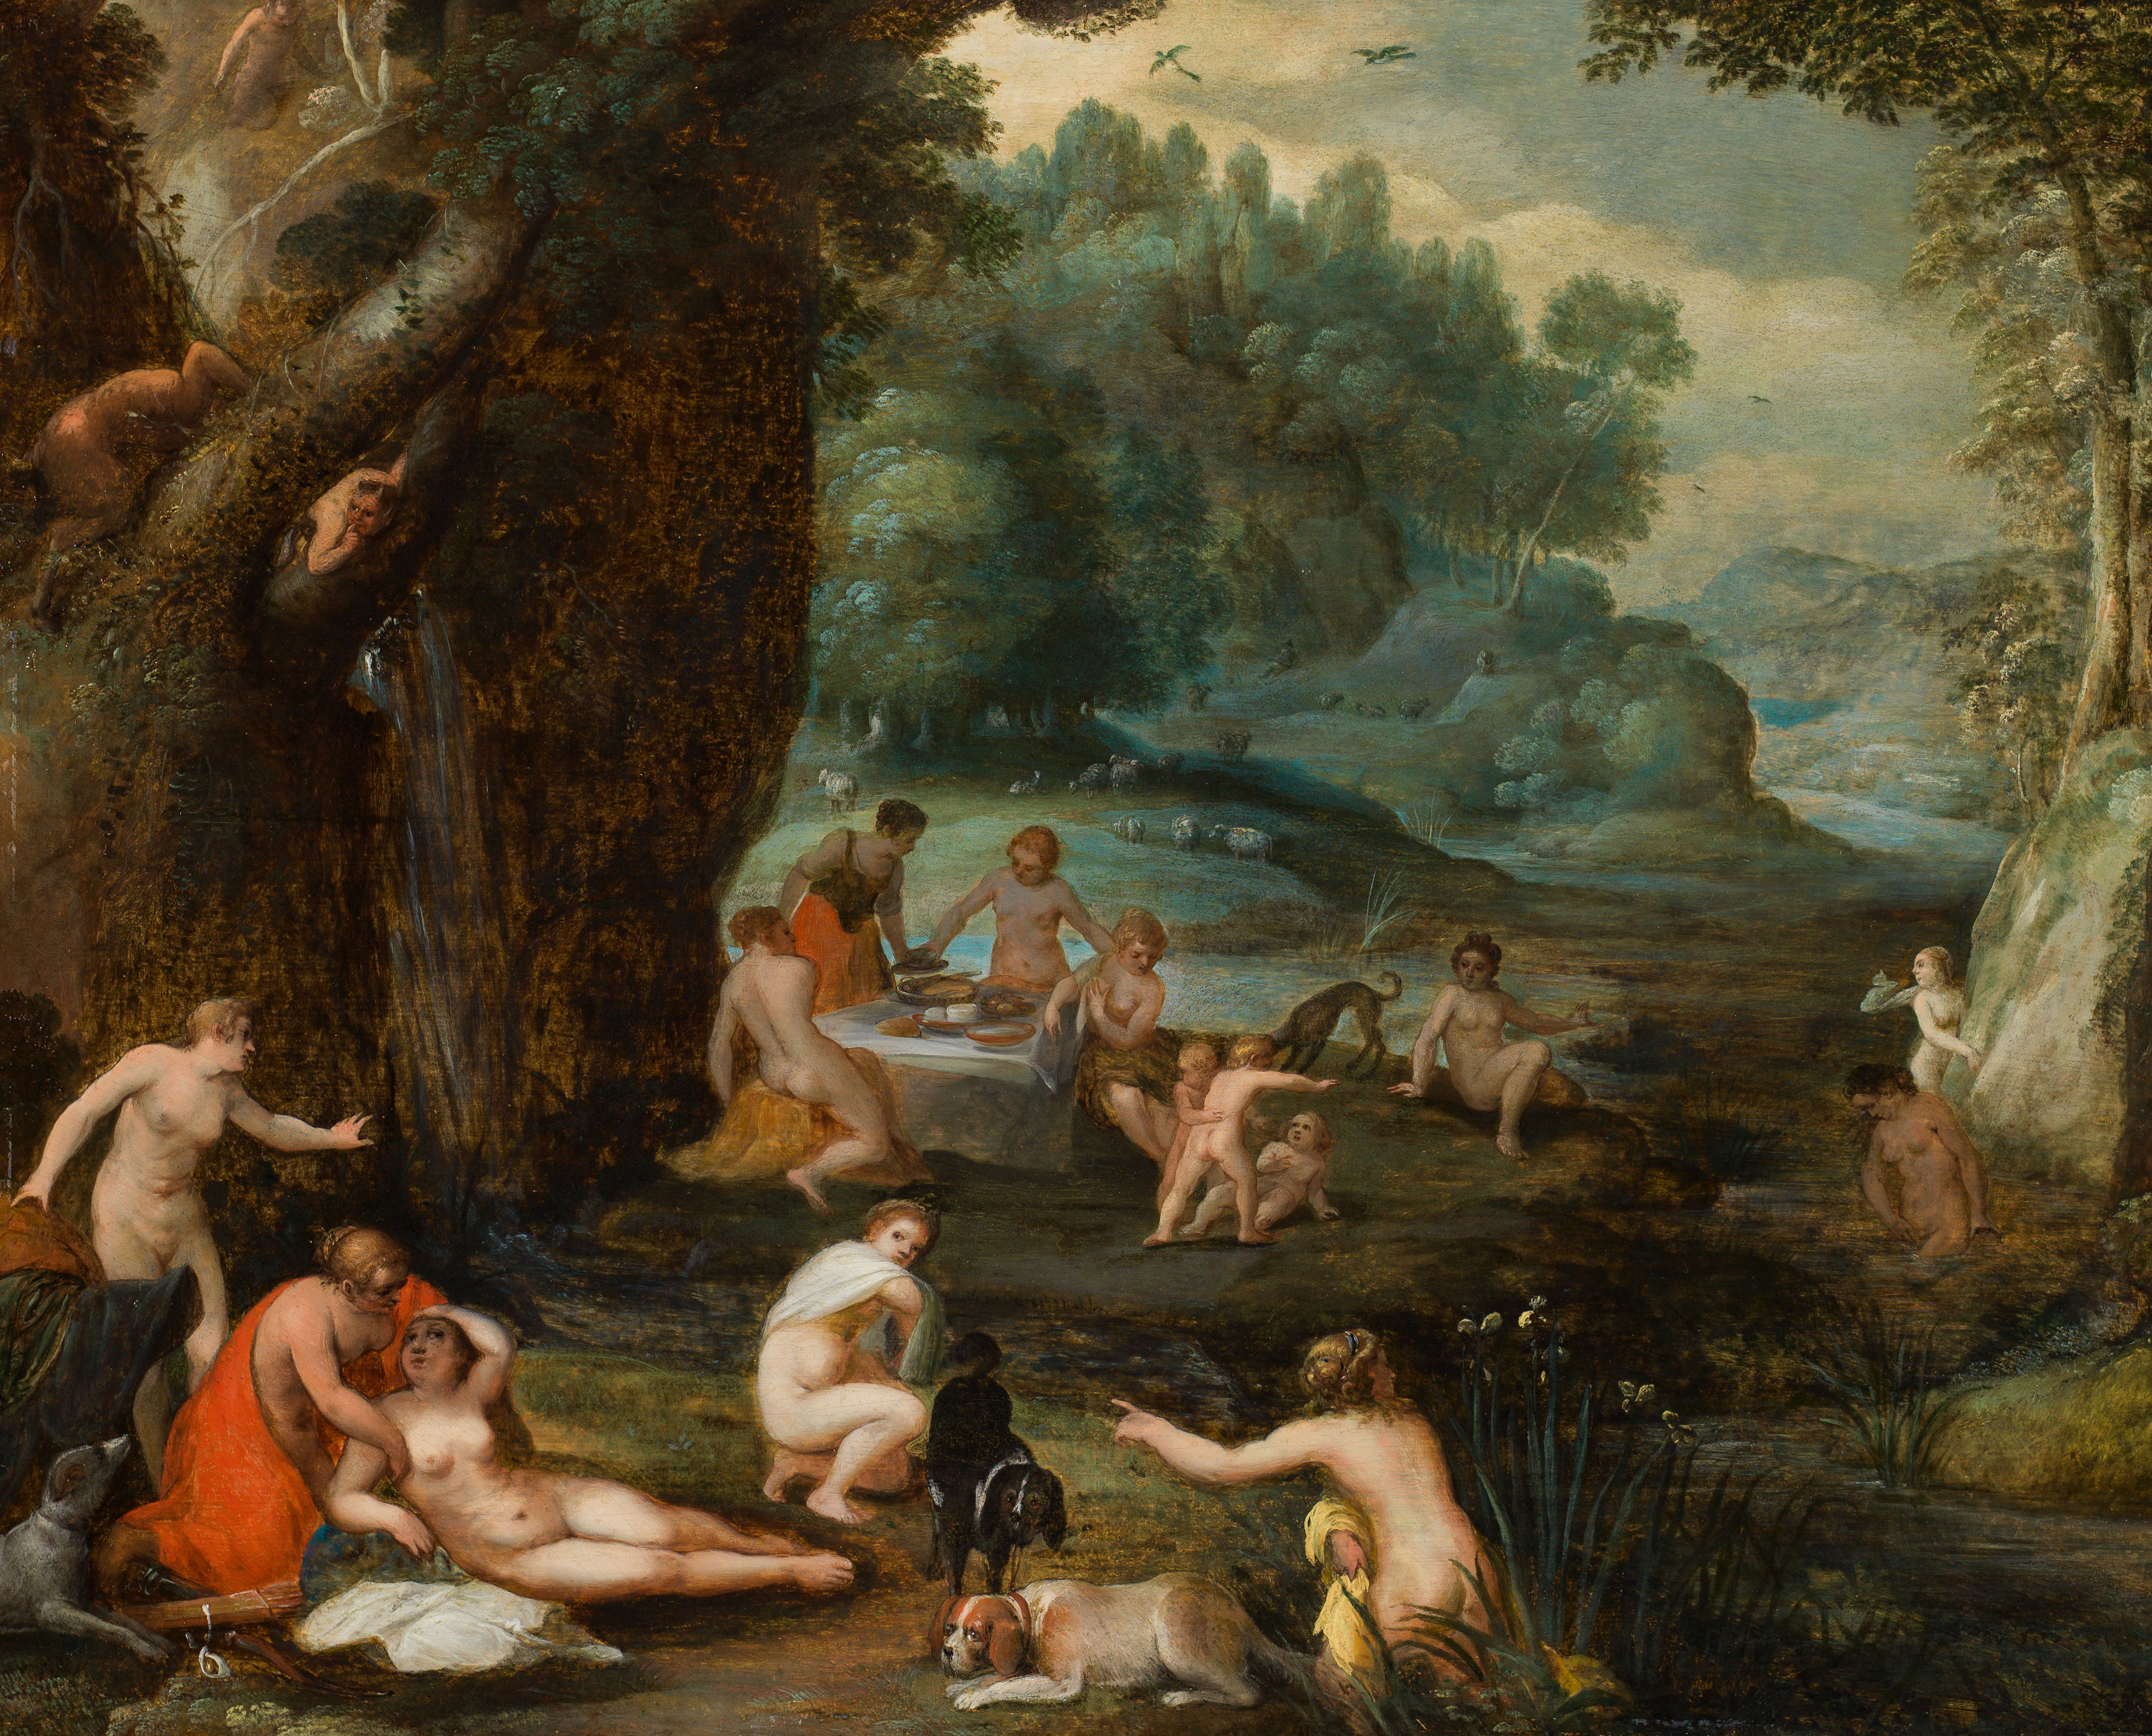 Adriaen van Stalbemt: Bathing nymphs spied upon by satyrs